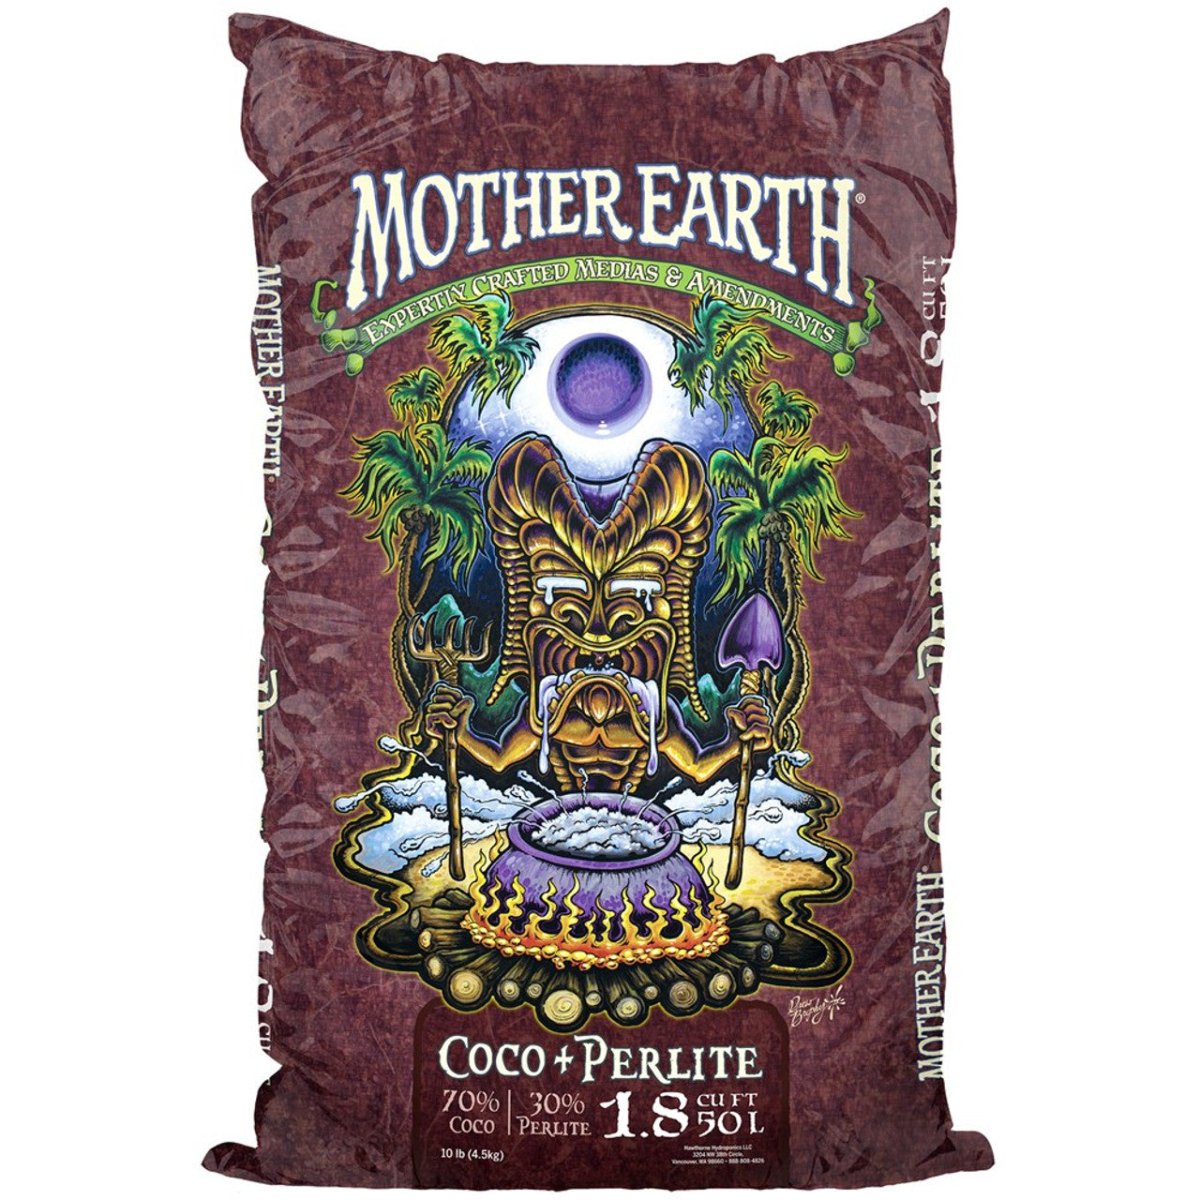 Soil, Media & Amendments - Mother Earth Coco + Perlite Mix 1.8CF, 70/30 - 849969012156- Gardin Warehouse